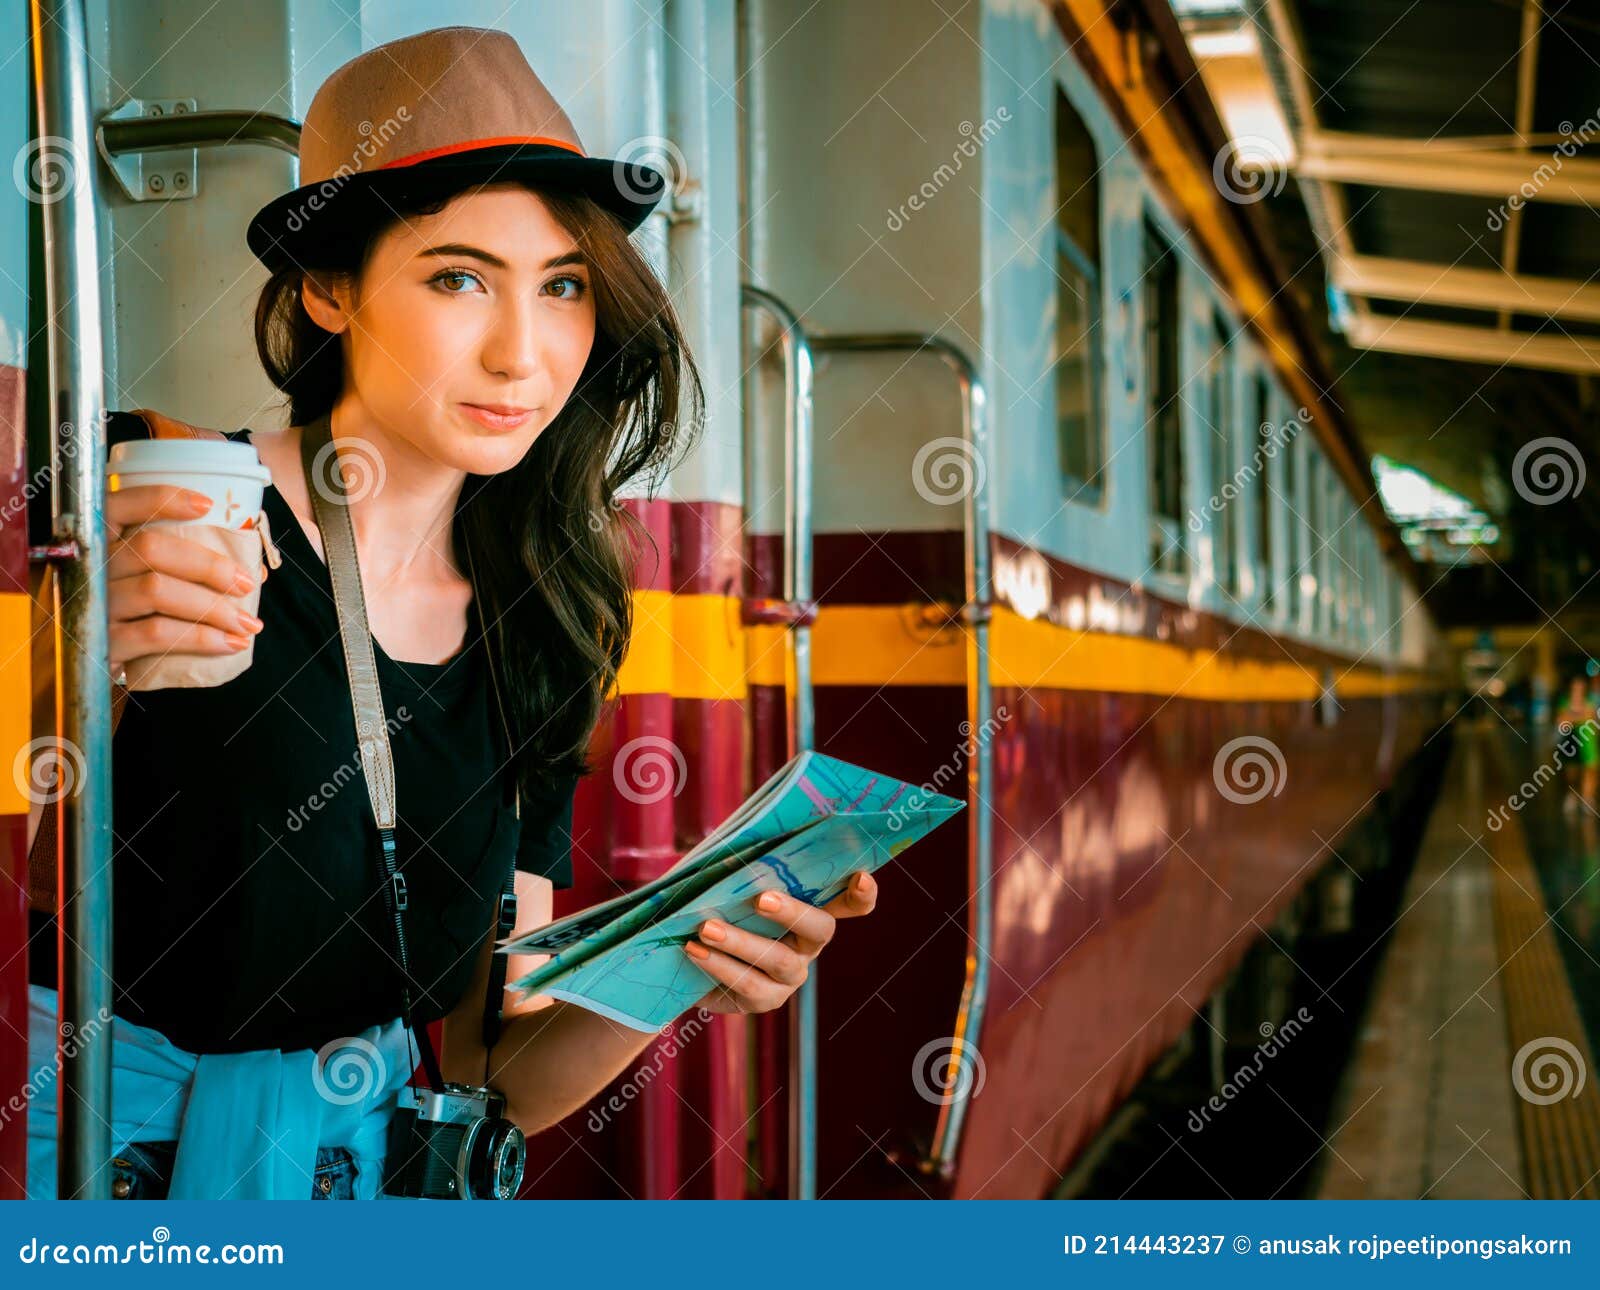 travel girl train